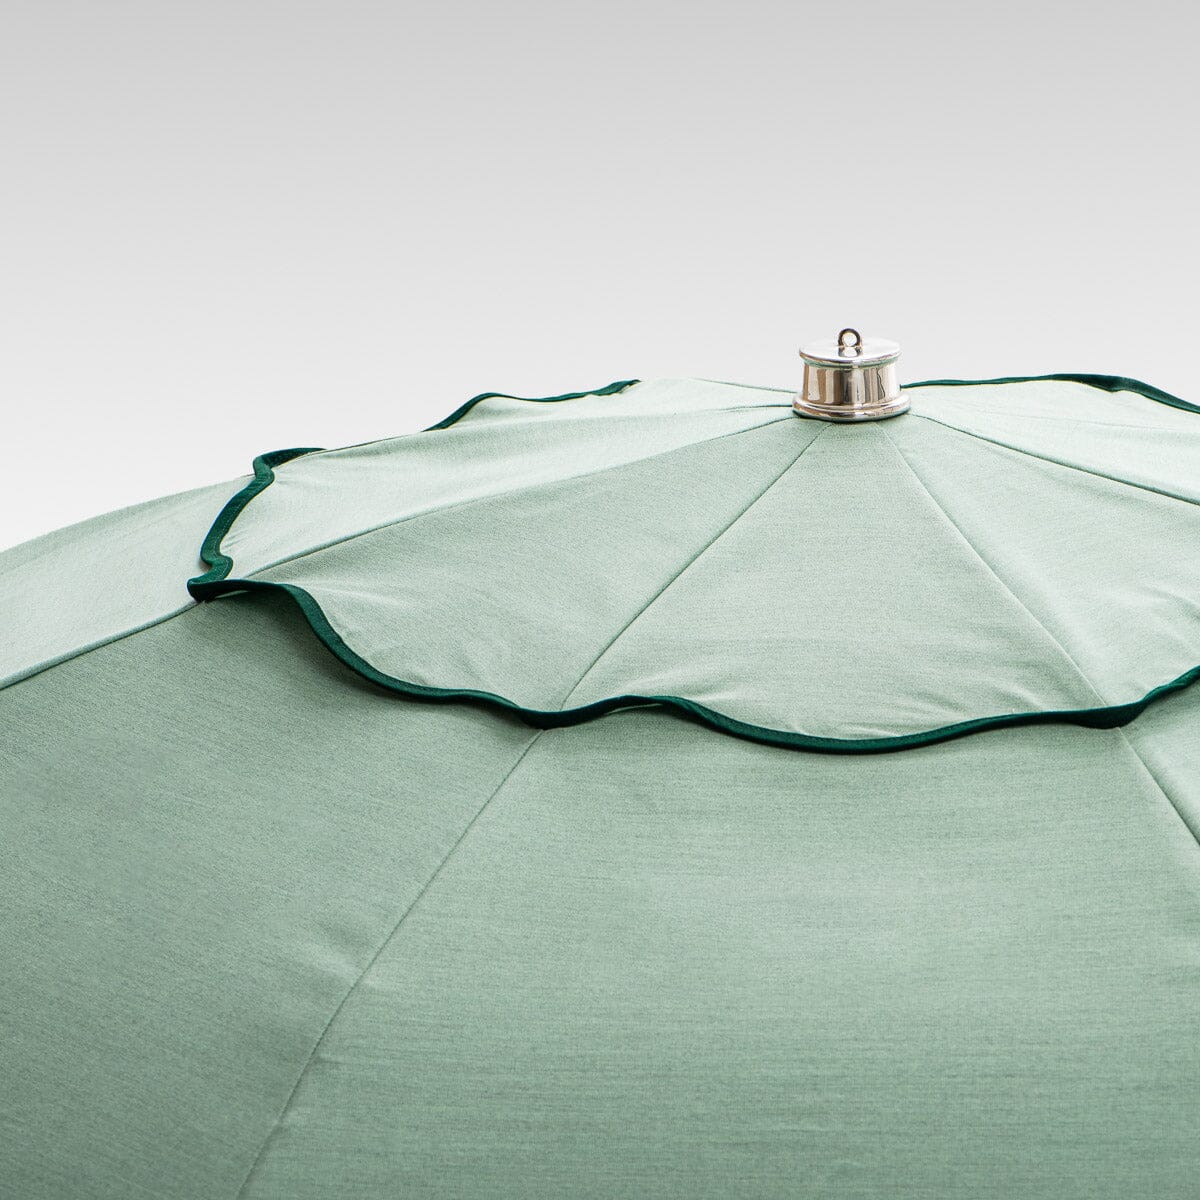 chrome top cap detail on green patio umbrella